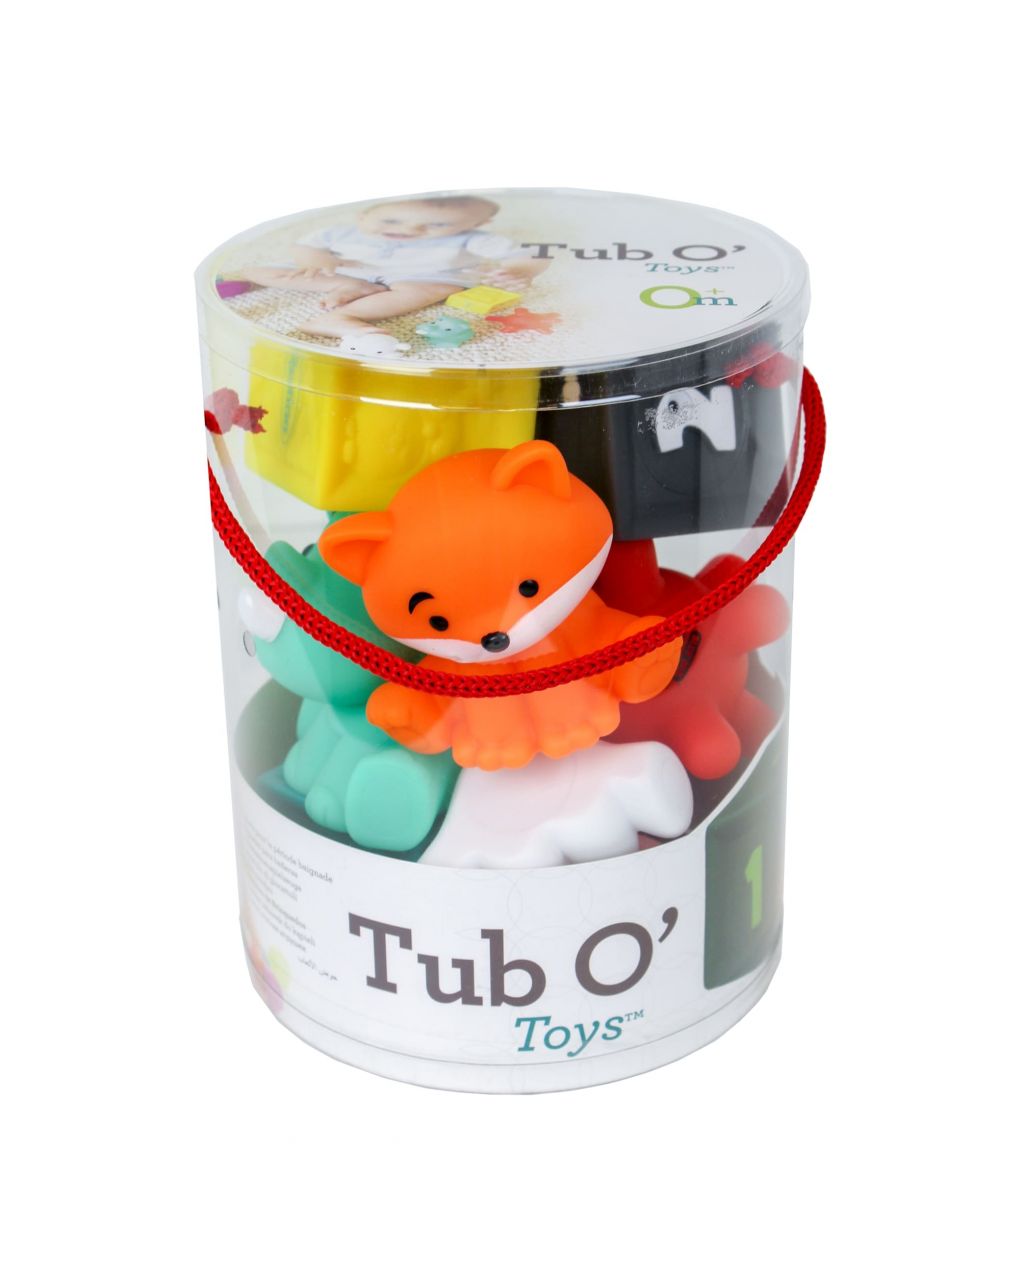 Infantino - set juguetes sensoriales multi textura - INFANTINO